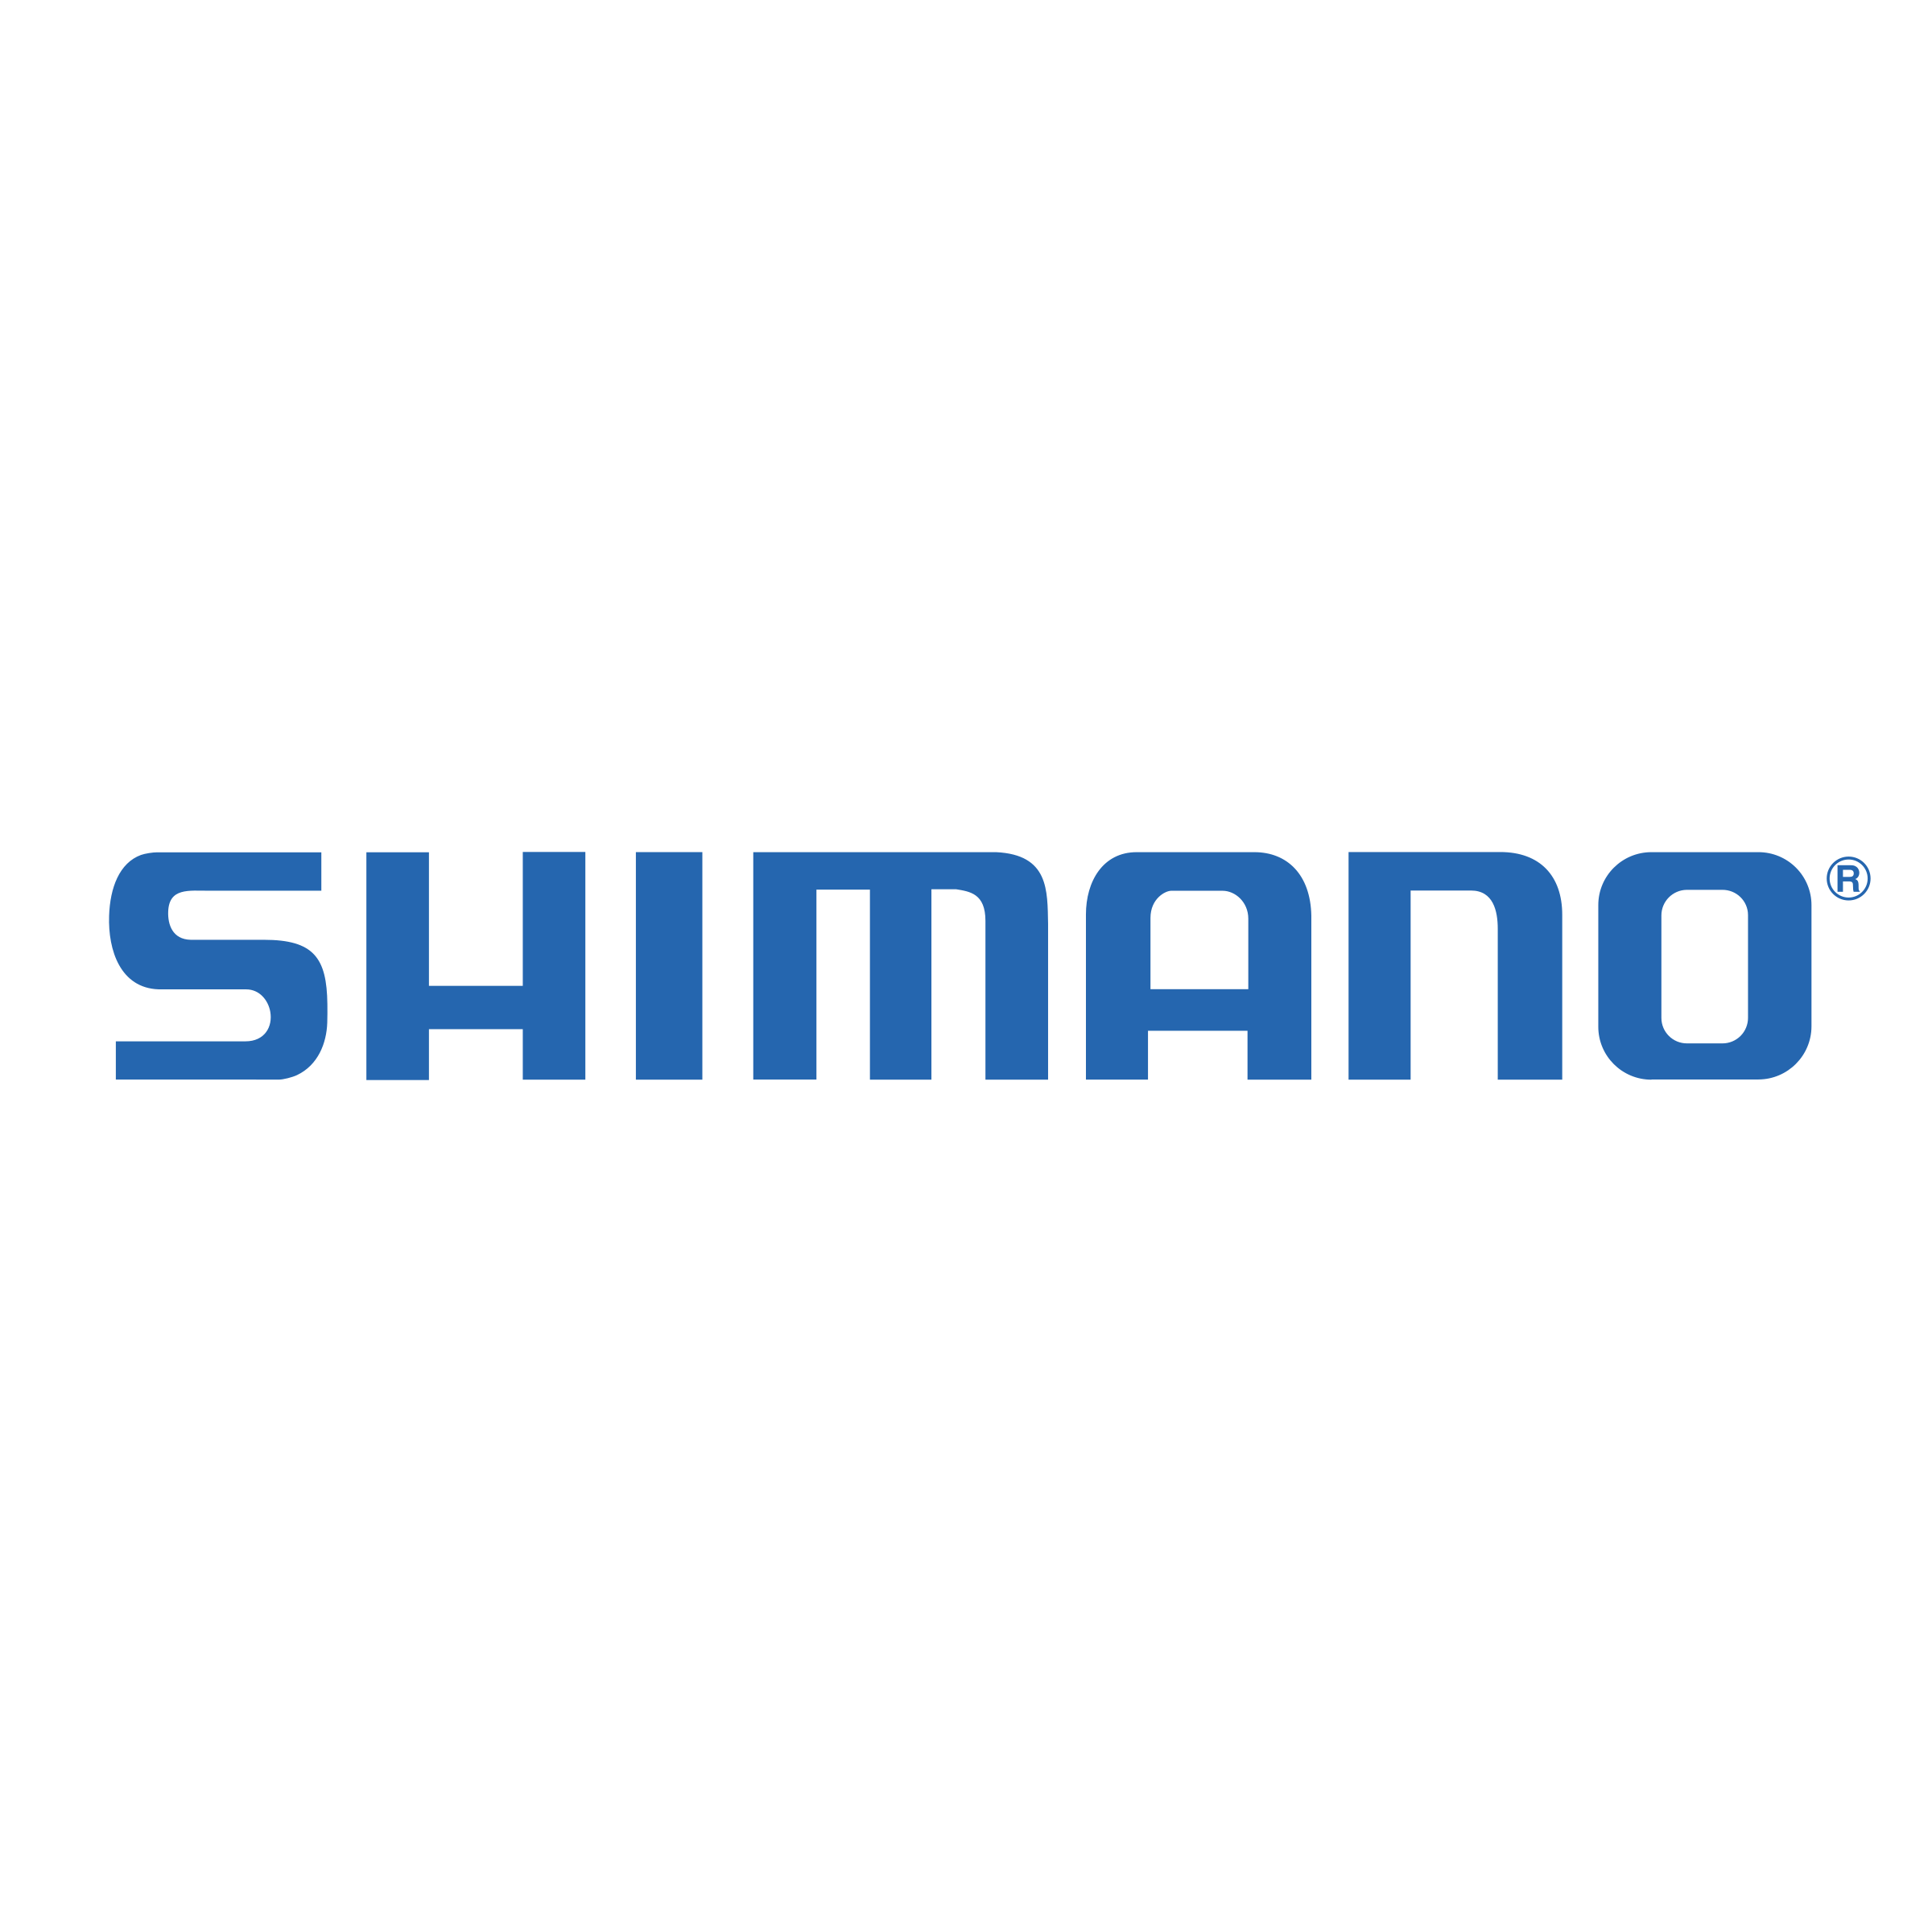 Shimano Bicycle Components logo - link to catalog